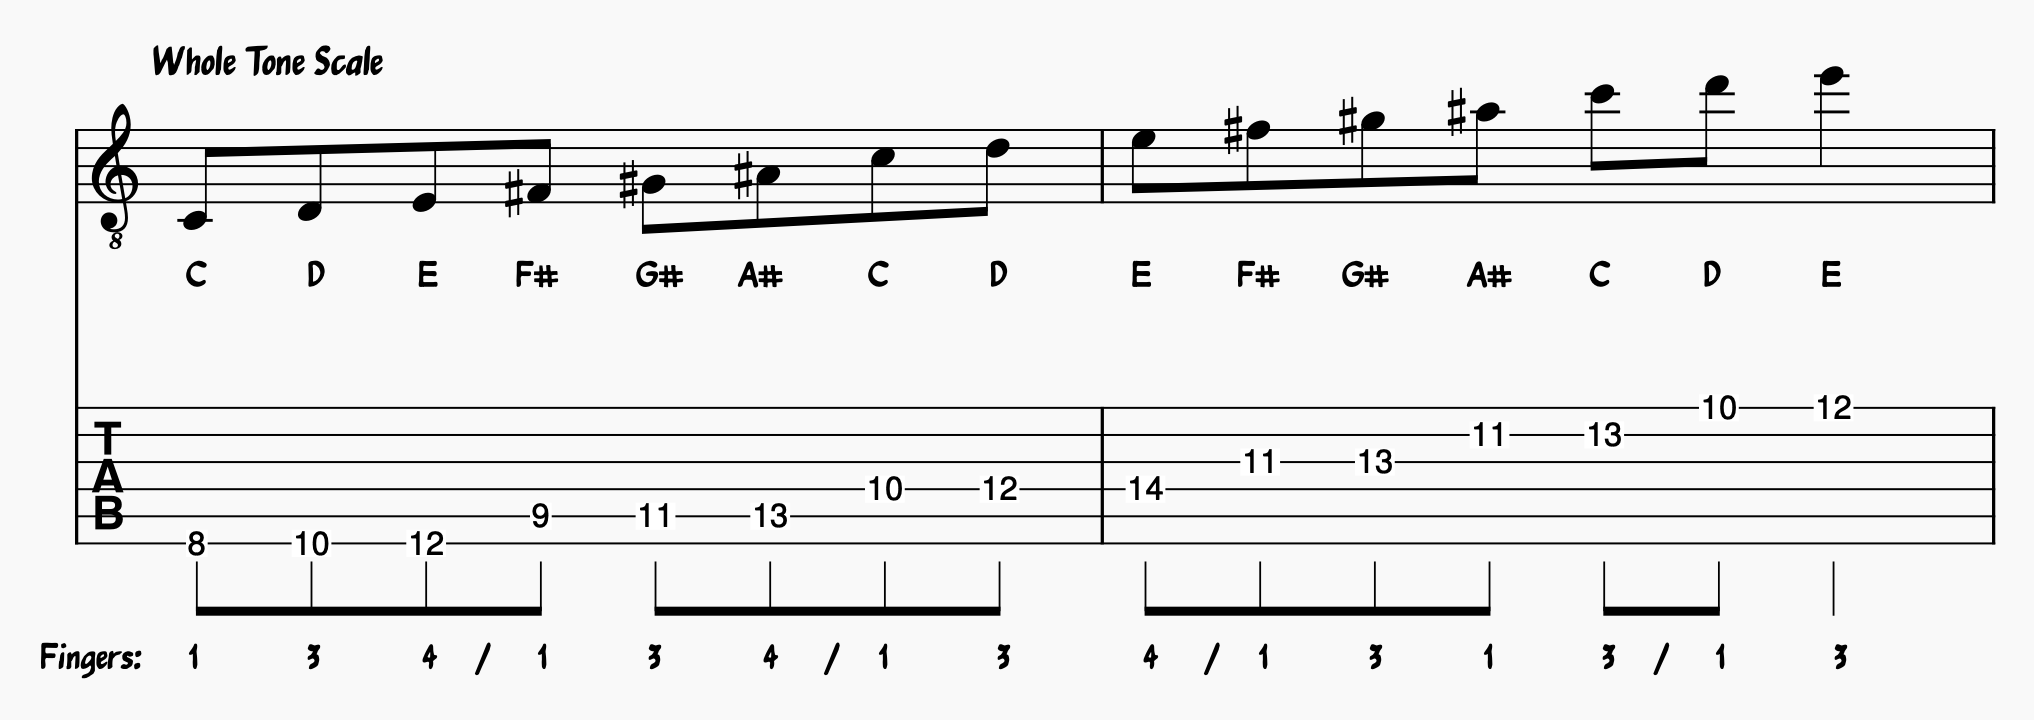 Whole-Tone Scale on Guitar